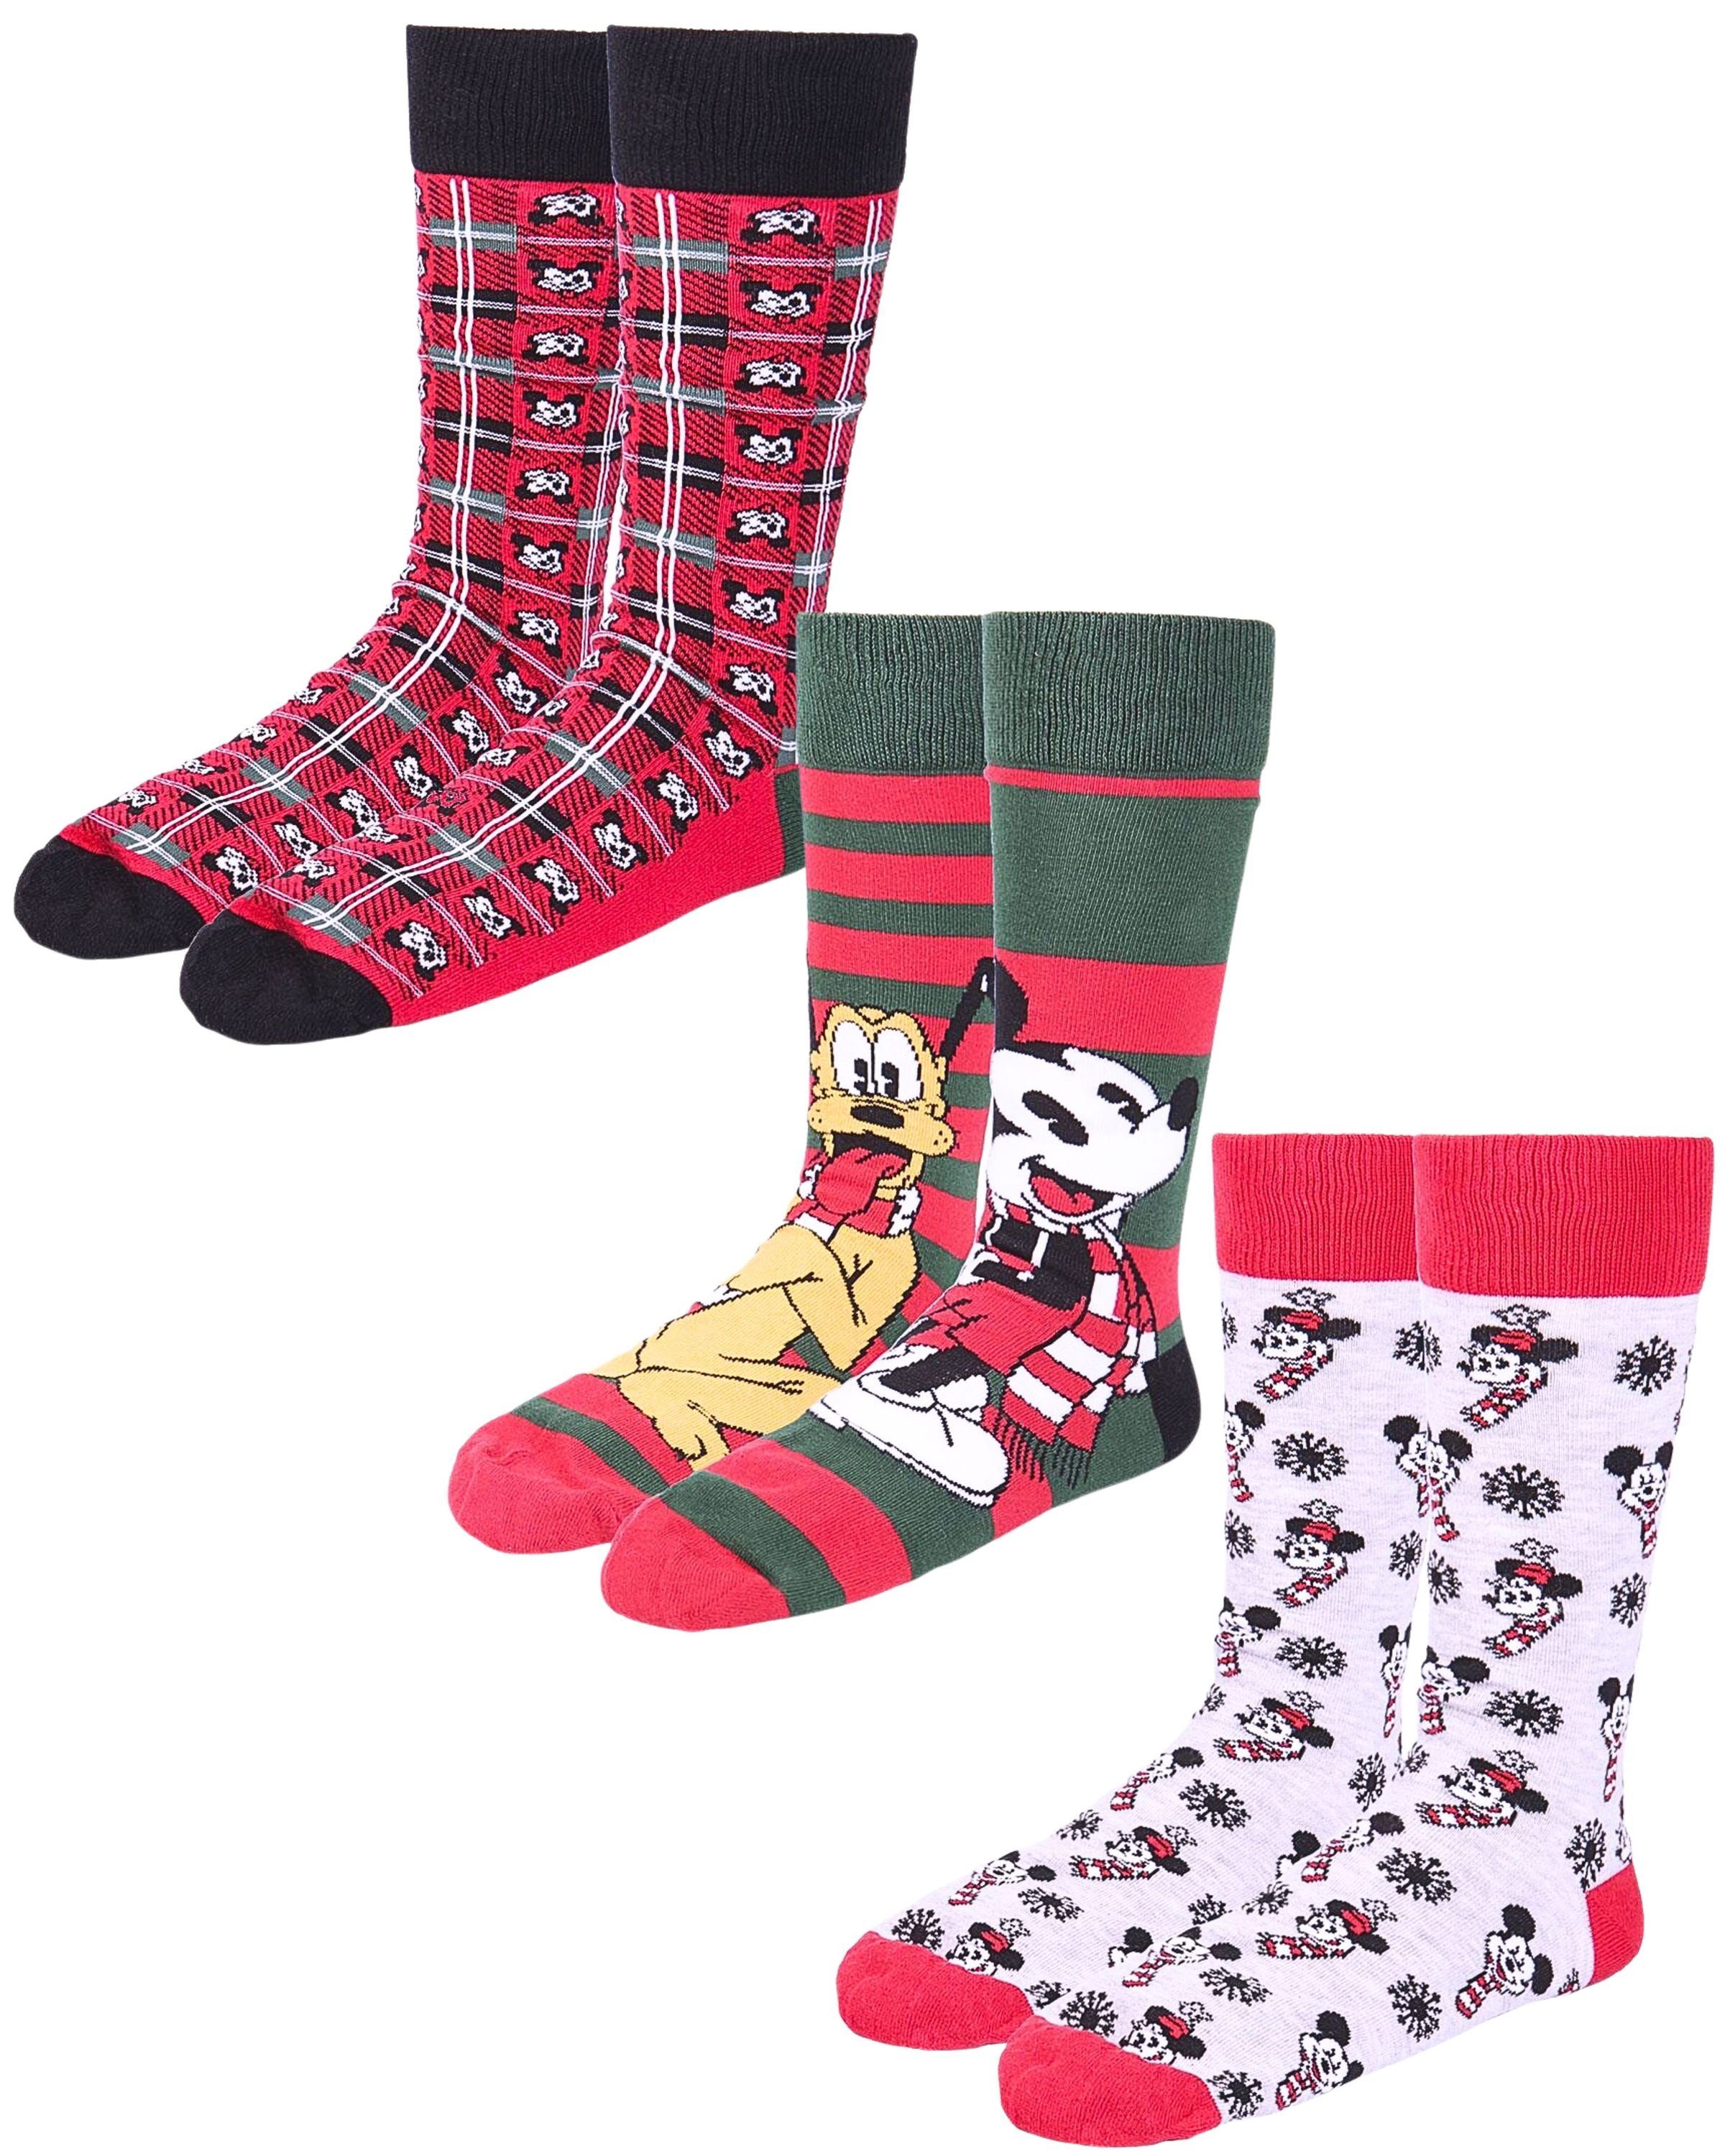 Disney Mickey Mouse Шкарпетки Micky Maus (3-Paar) Strümpfe Weihnachtsset im Geschenkkarton Gr. 40-46